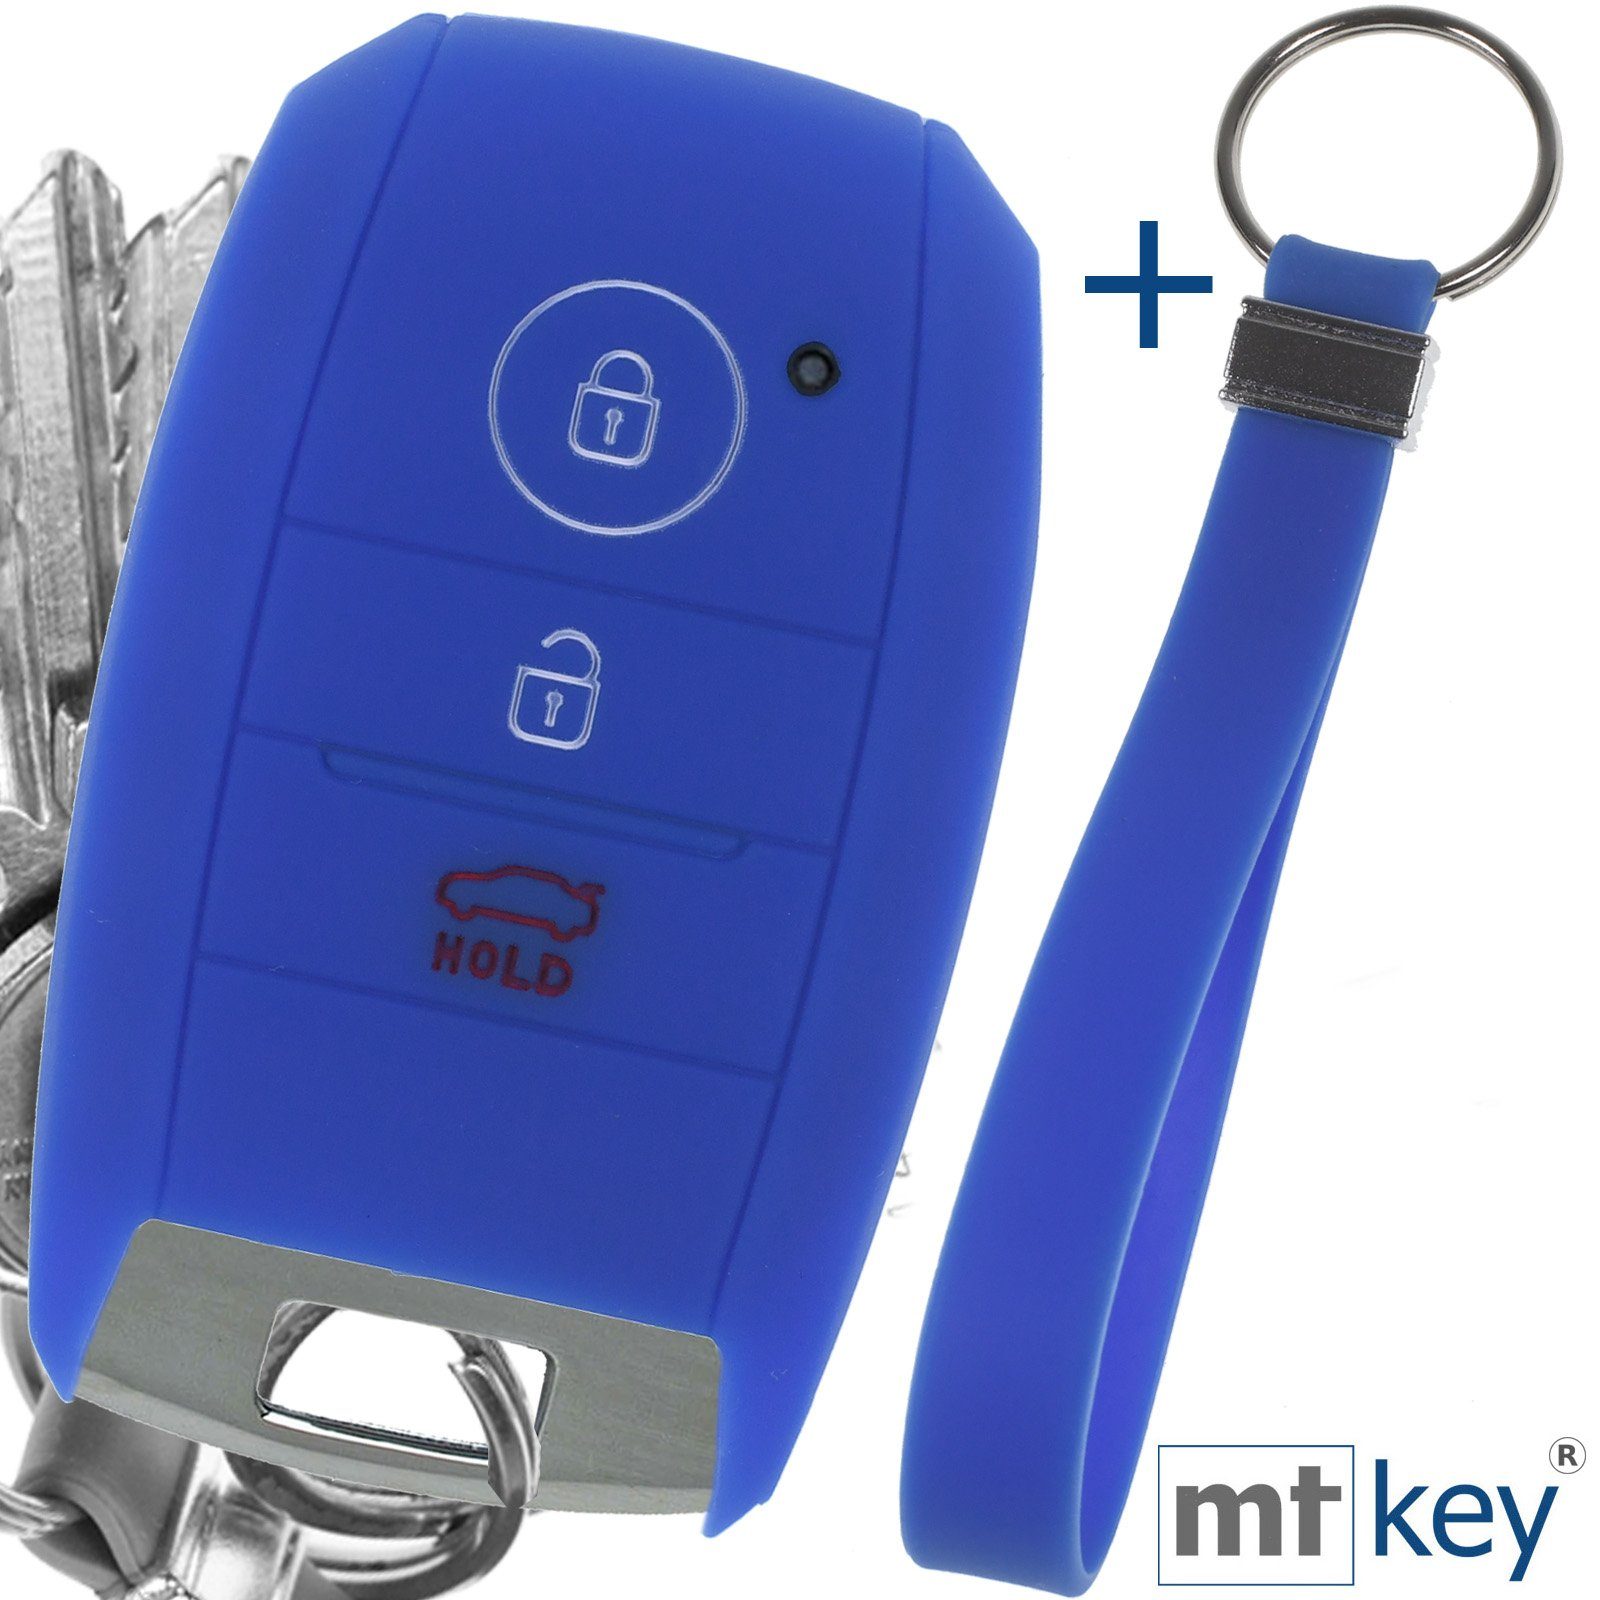 mt-key Schlüsseltasche Autoschlüssel Softcase Silikon Schutzhülle Blau mit Schlüsselband, für KIA Picantio Rio Ceed Soul Sportage Stonic 3 Tasten KEYLESS